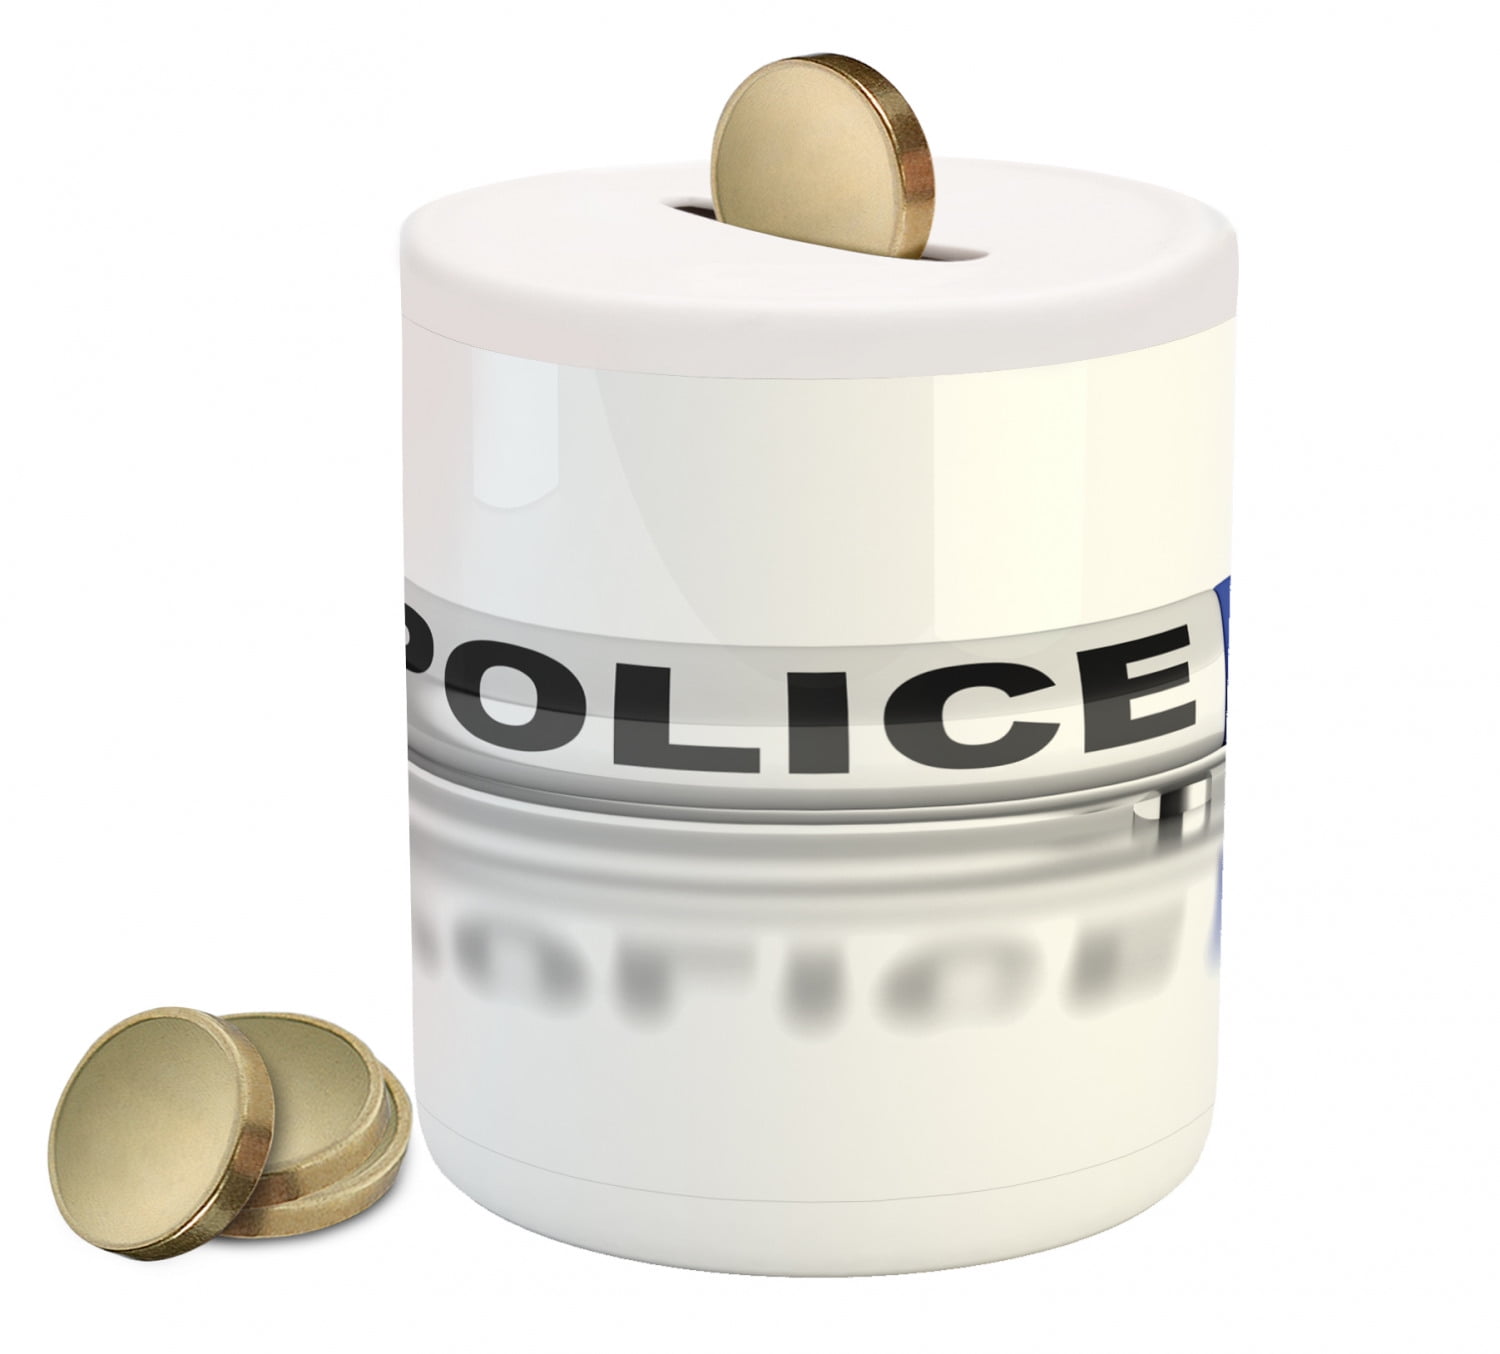 Police Box Ceramic Money Box 